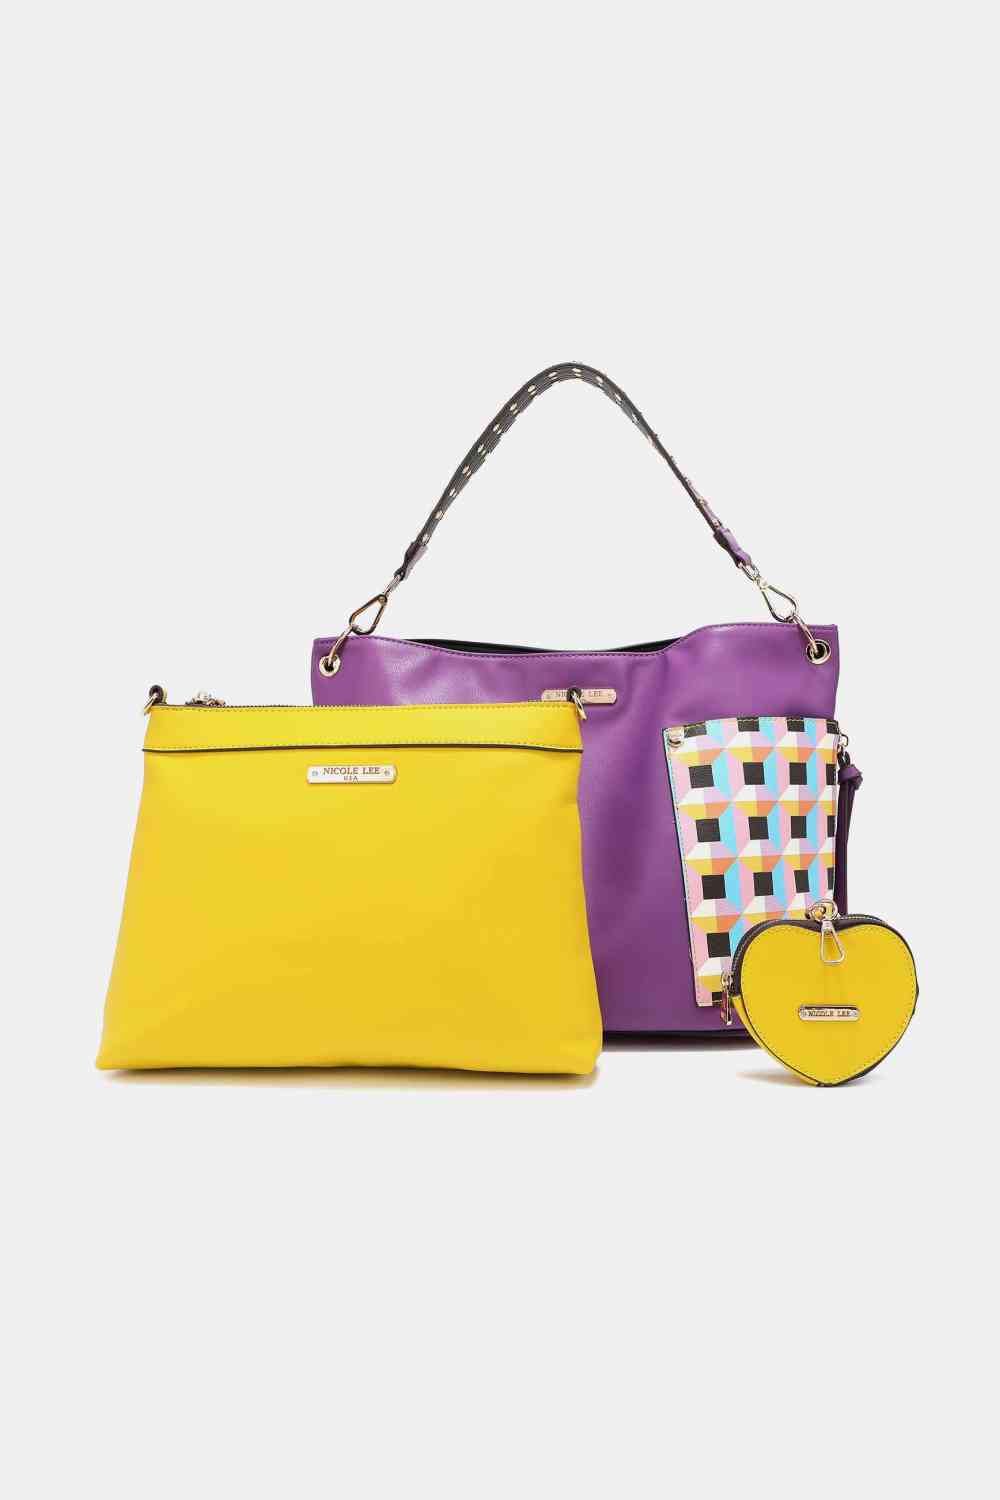 Nicole Lee USA Quihn 3-Piece Handbag Set Purpure